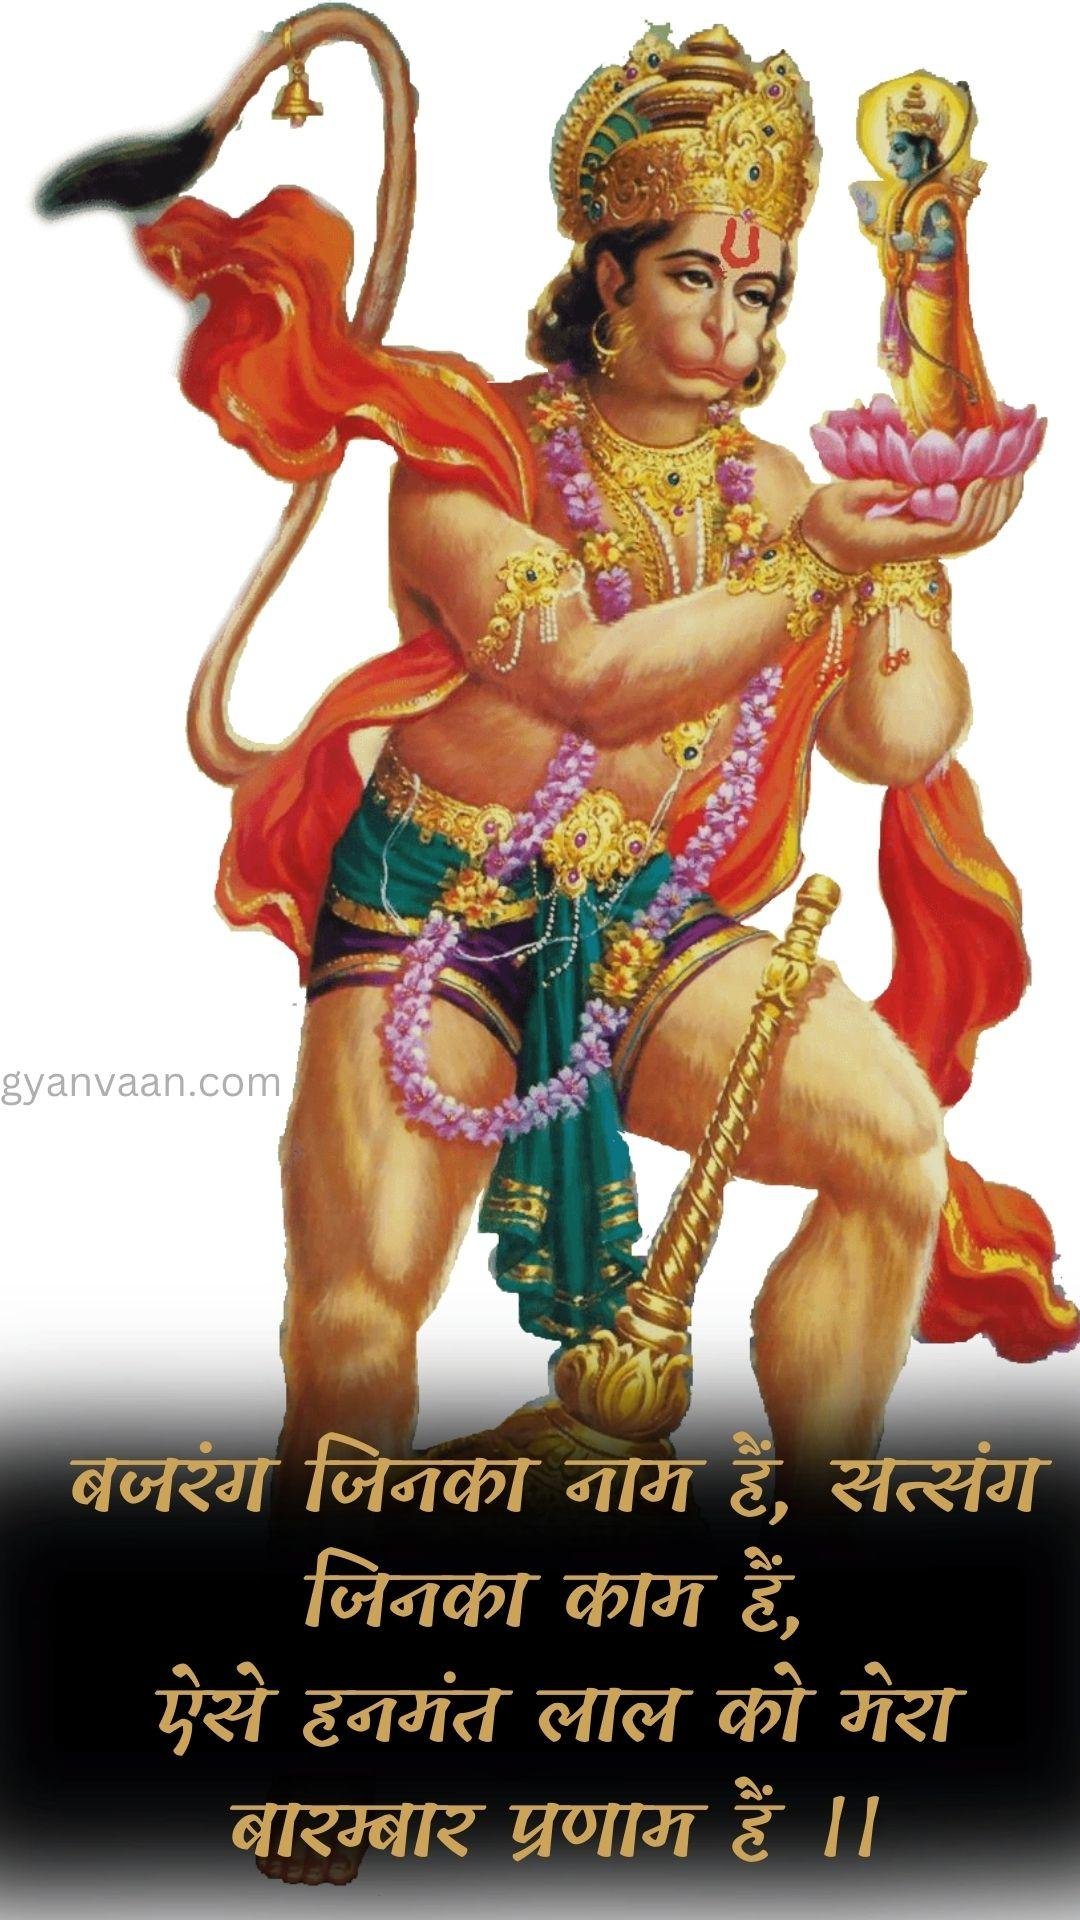 Hanuman Quotes Shayari And Whatsapp Status For Mobile With Hanuman Images And Photos 29 - Hanuman Images